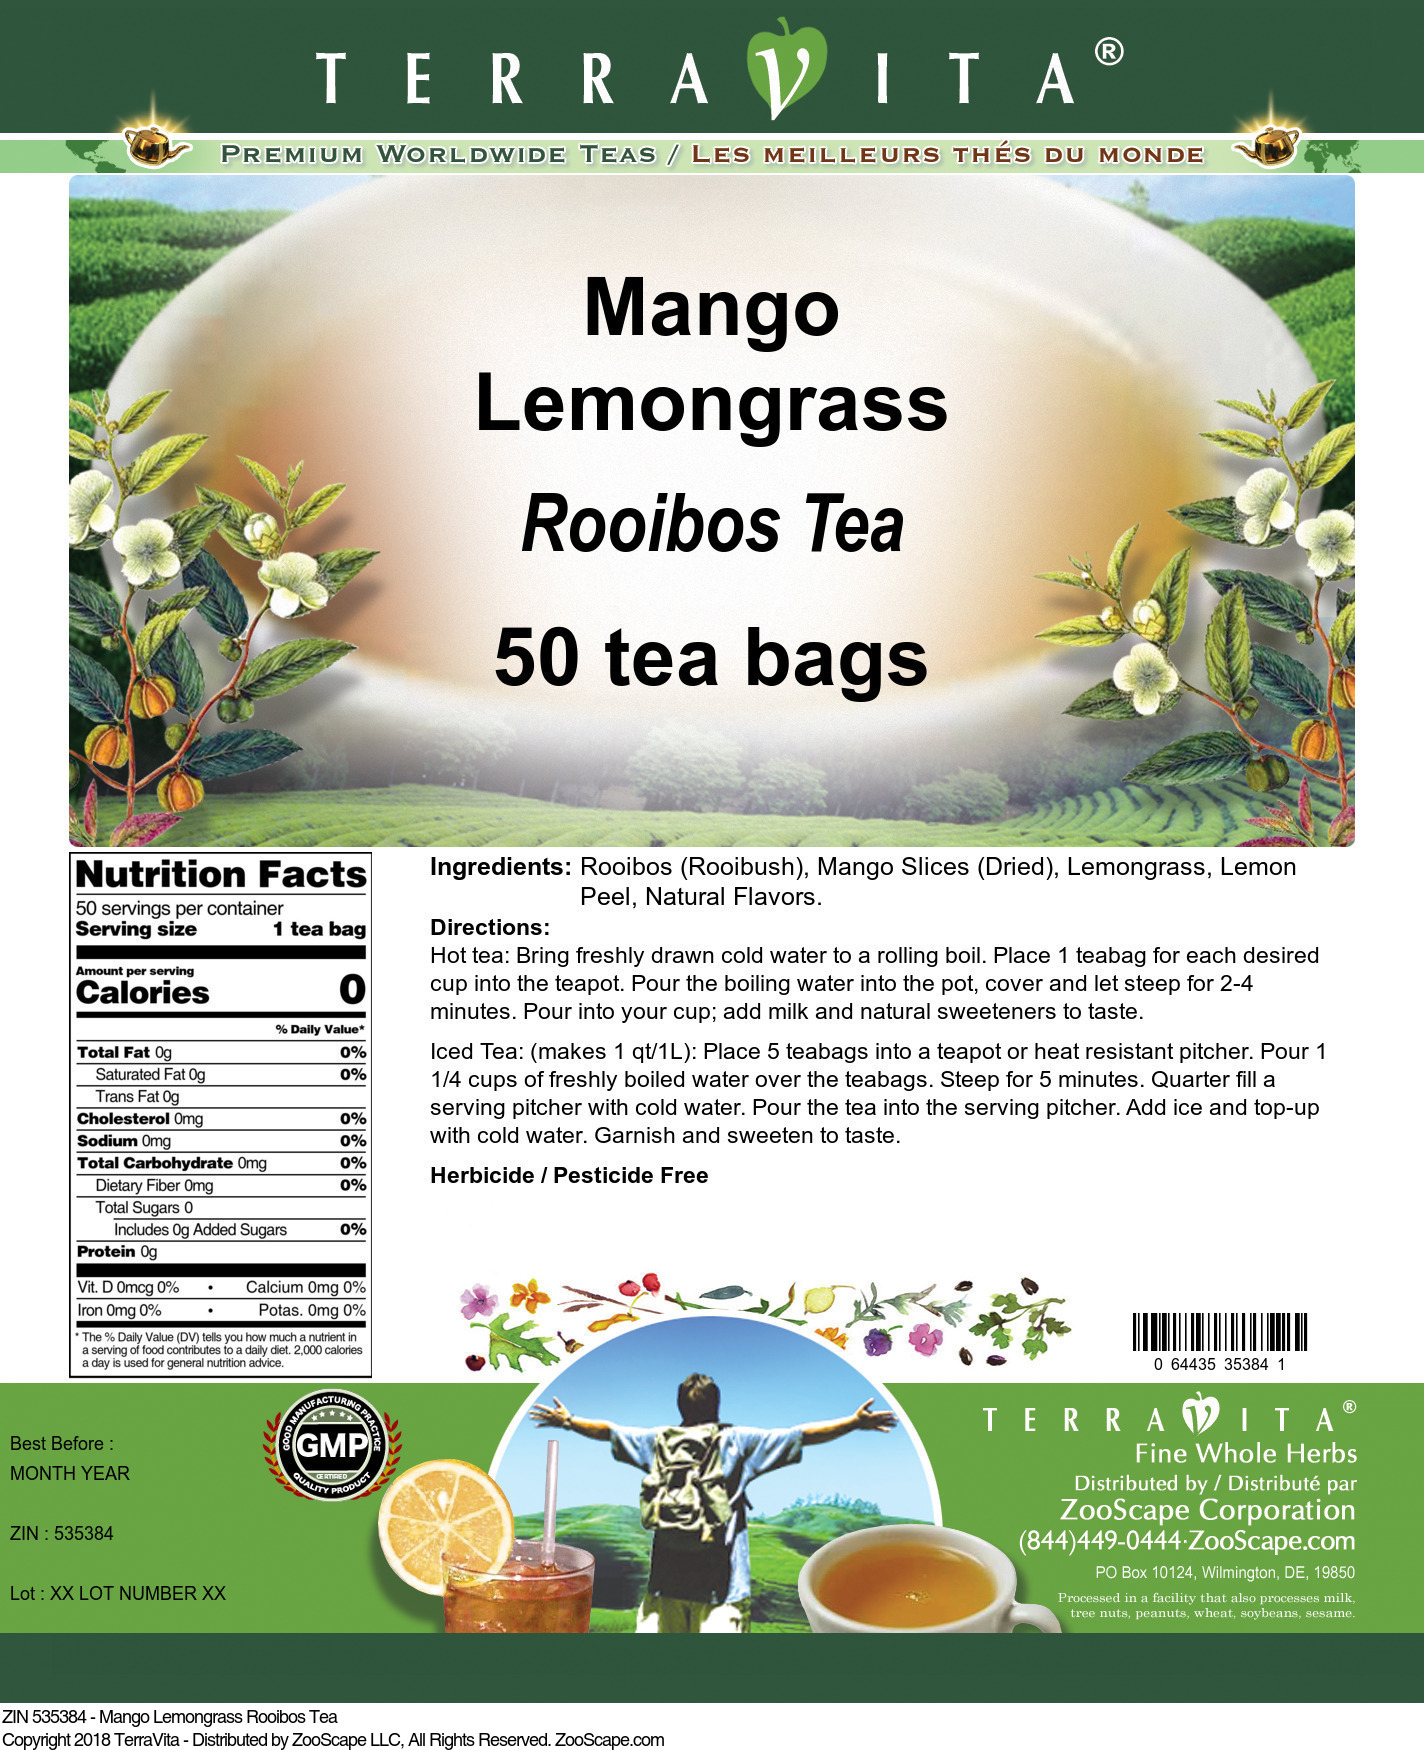 Mango Lemongrass Rooibos Tea - Label